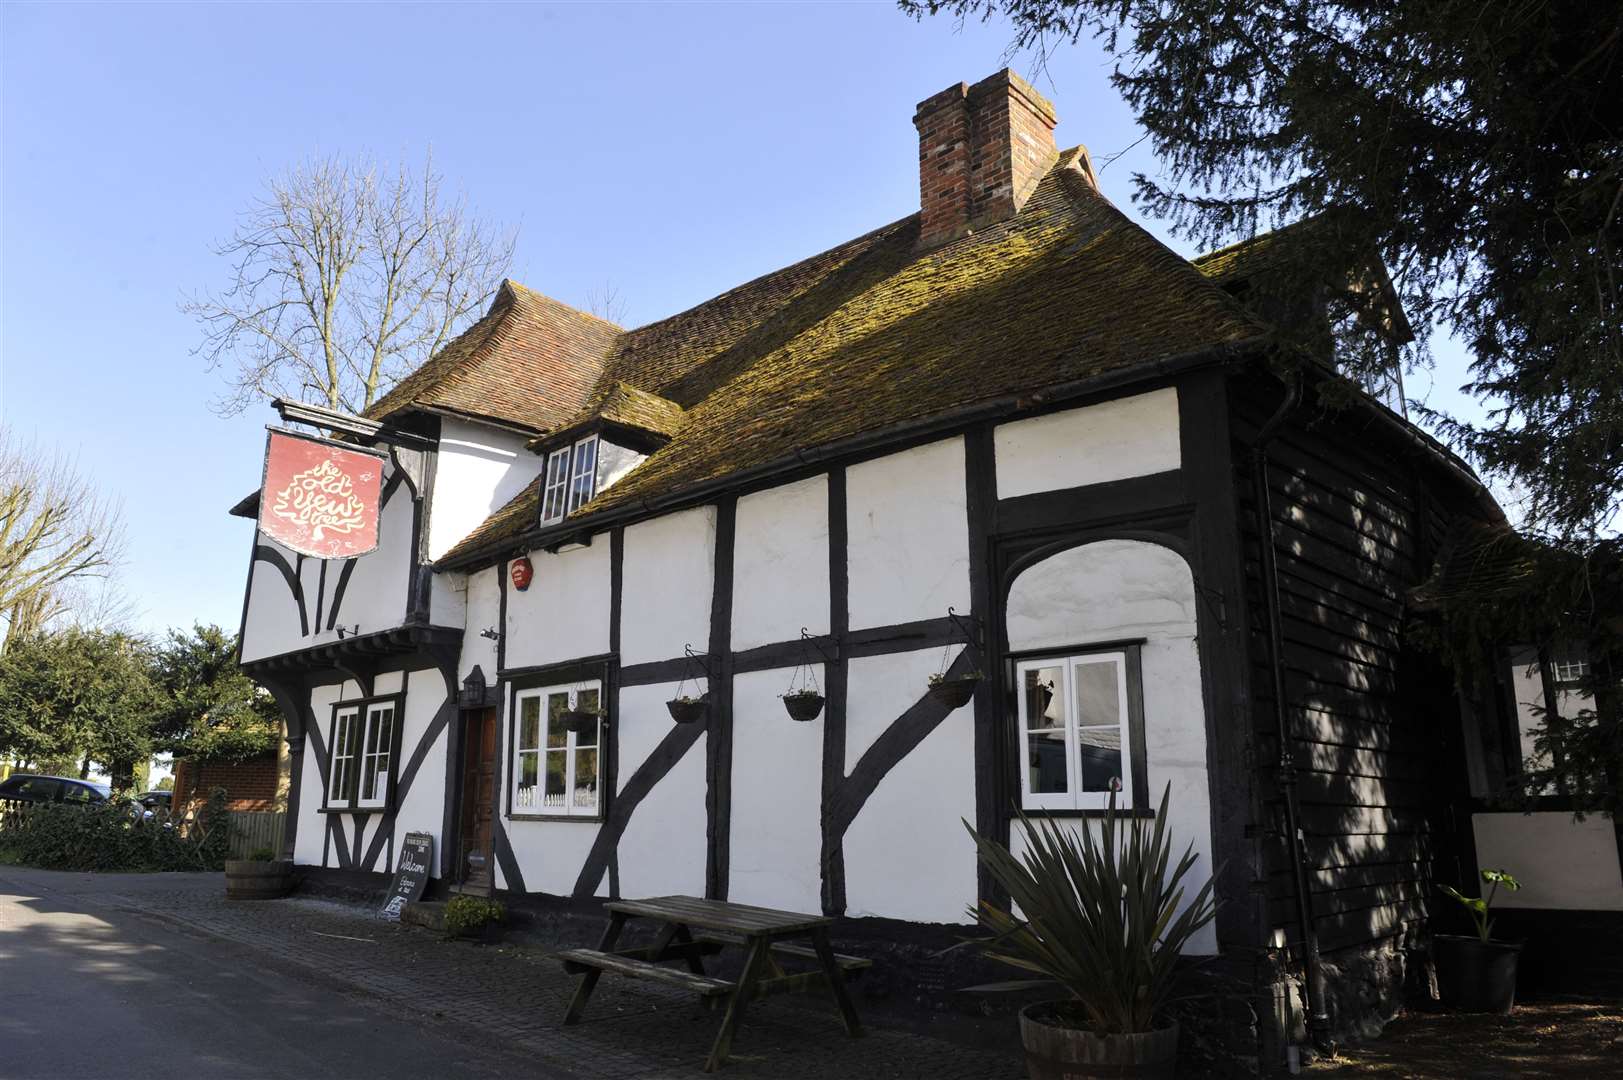 Ye Olde Yew Tree Inn, in Westbere near Canterbury, was built in 1348, but hasn't always been a pub